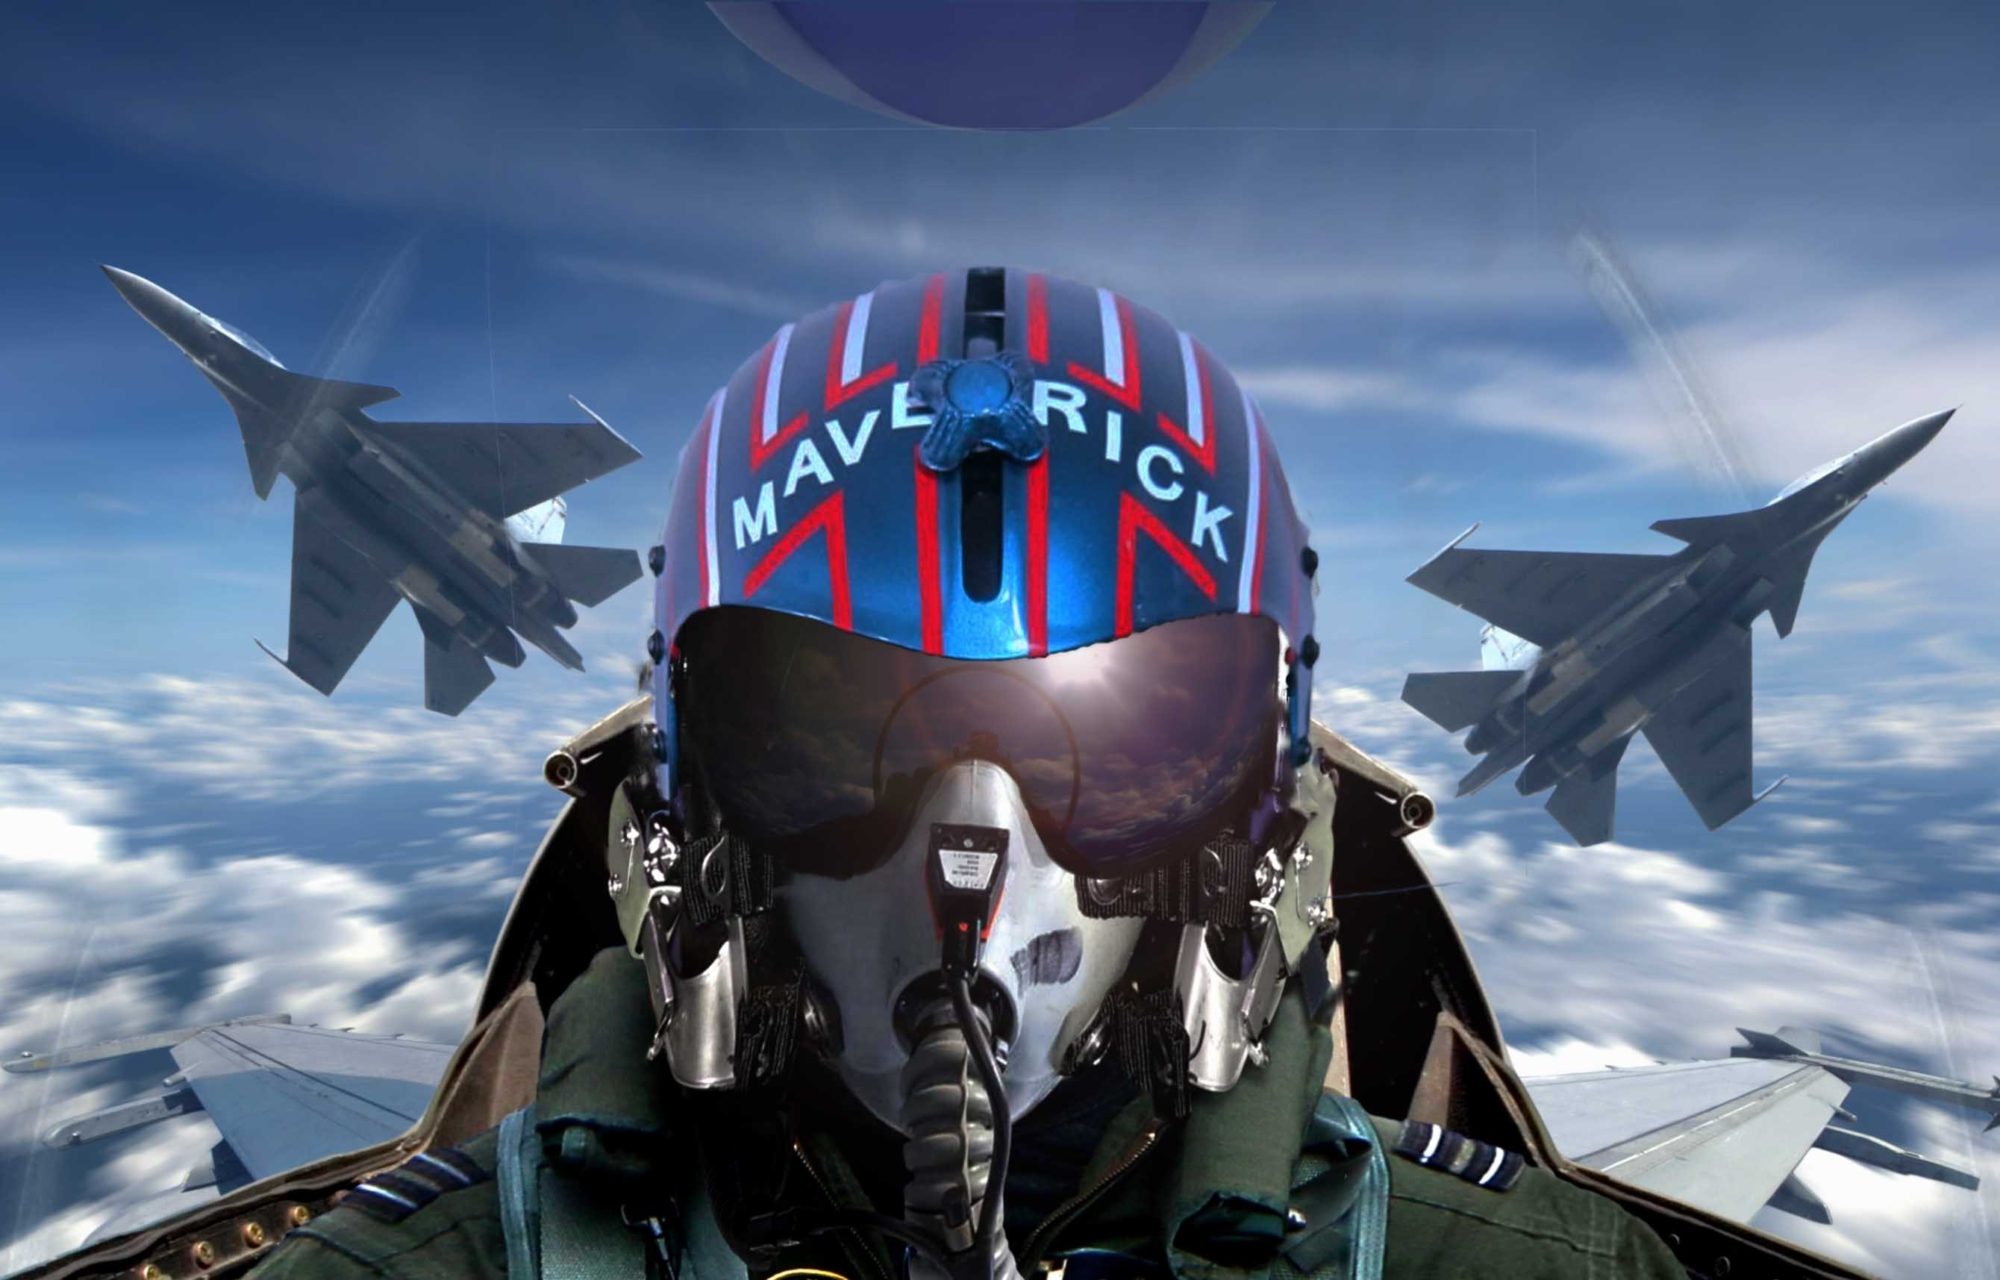 instal the new version for ios Top Gun: Maverick